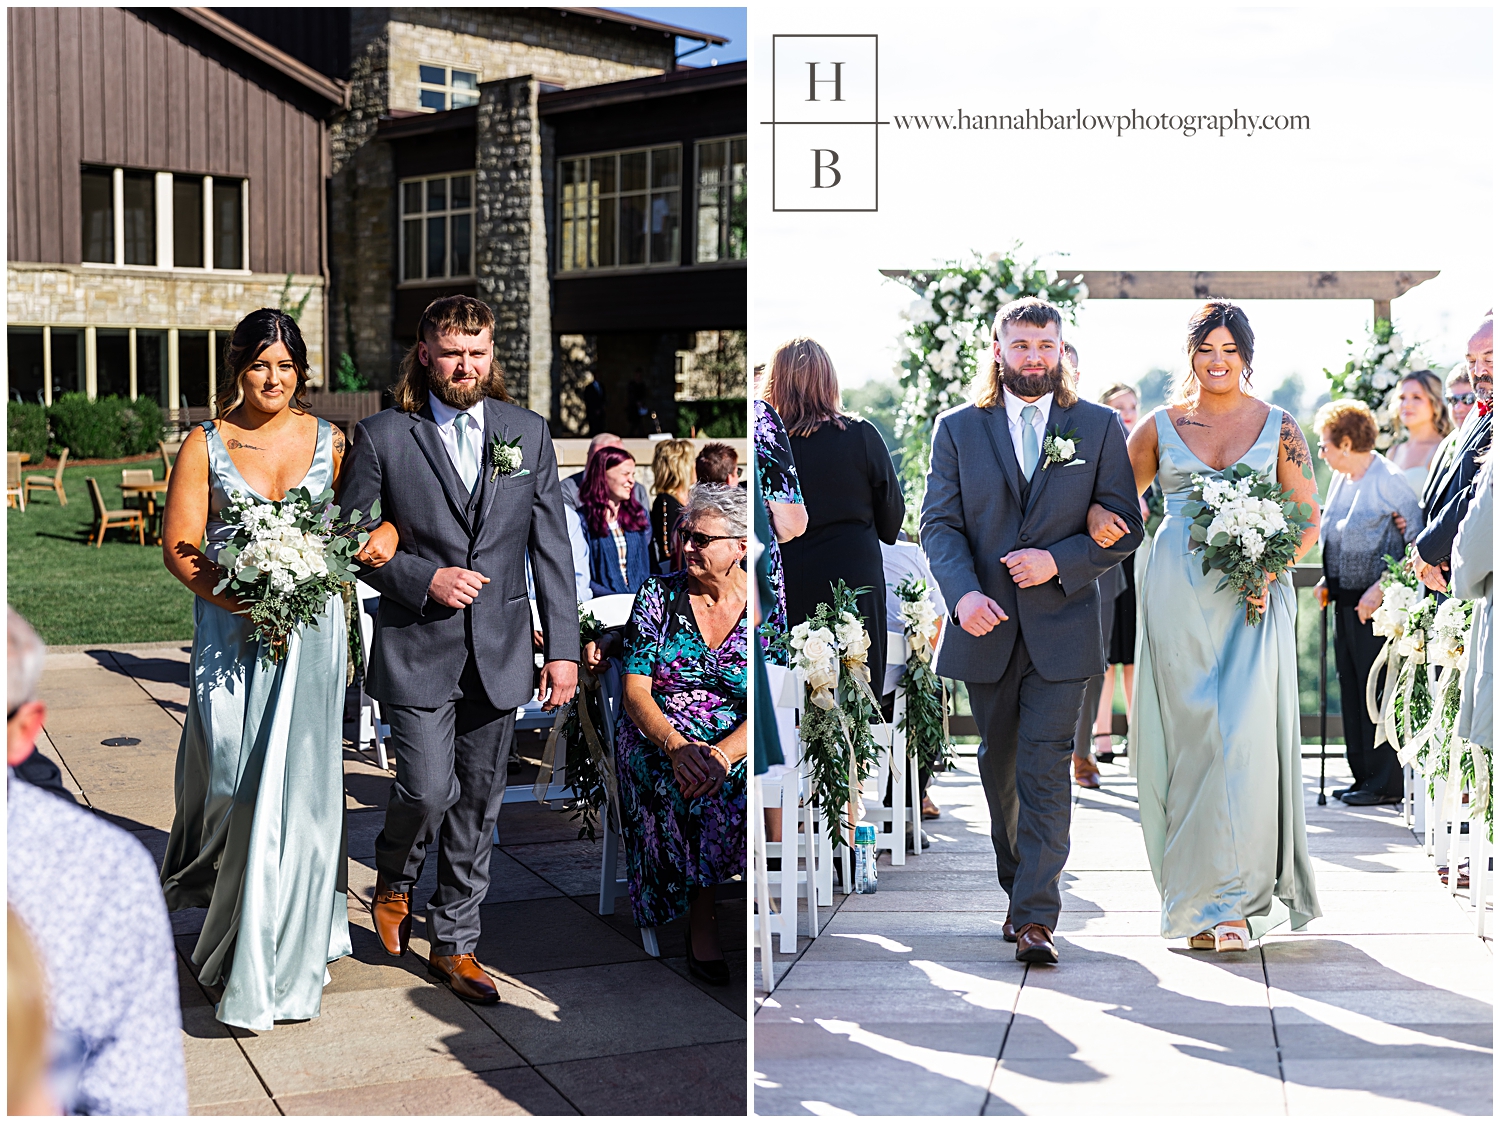 Bridesmaid in pale green dress walks down aisle escorted by groomsman in grey tux.